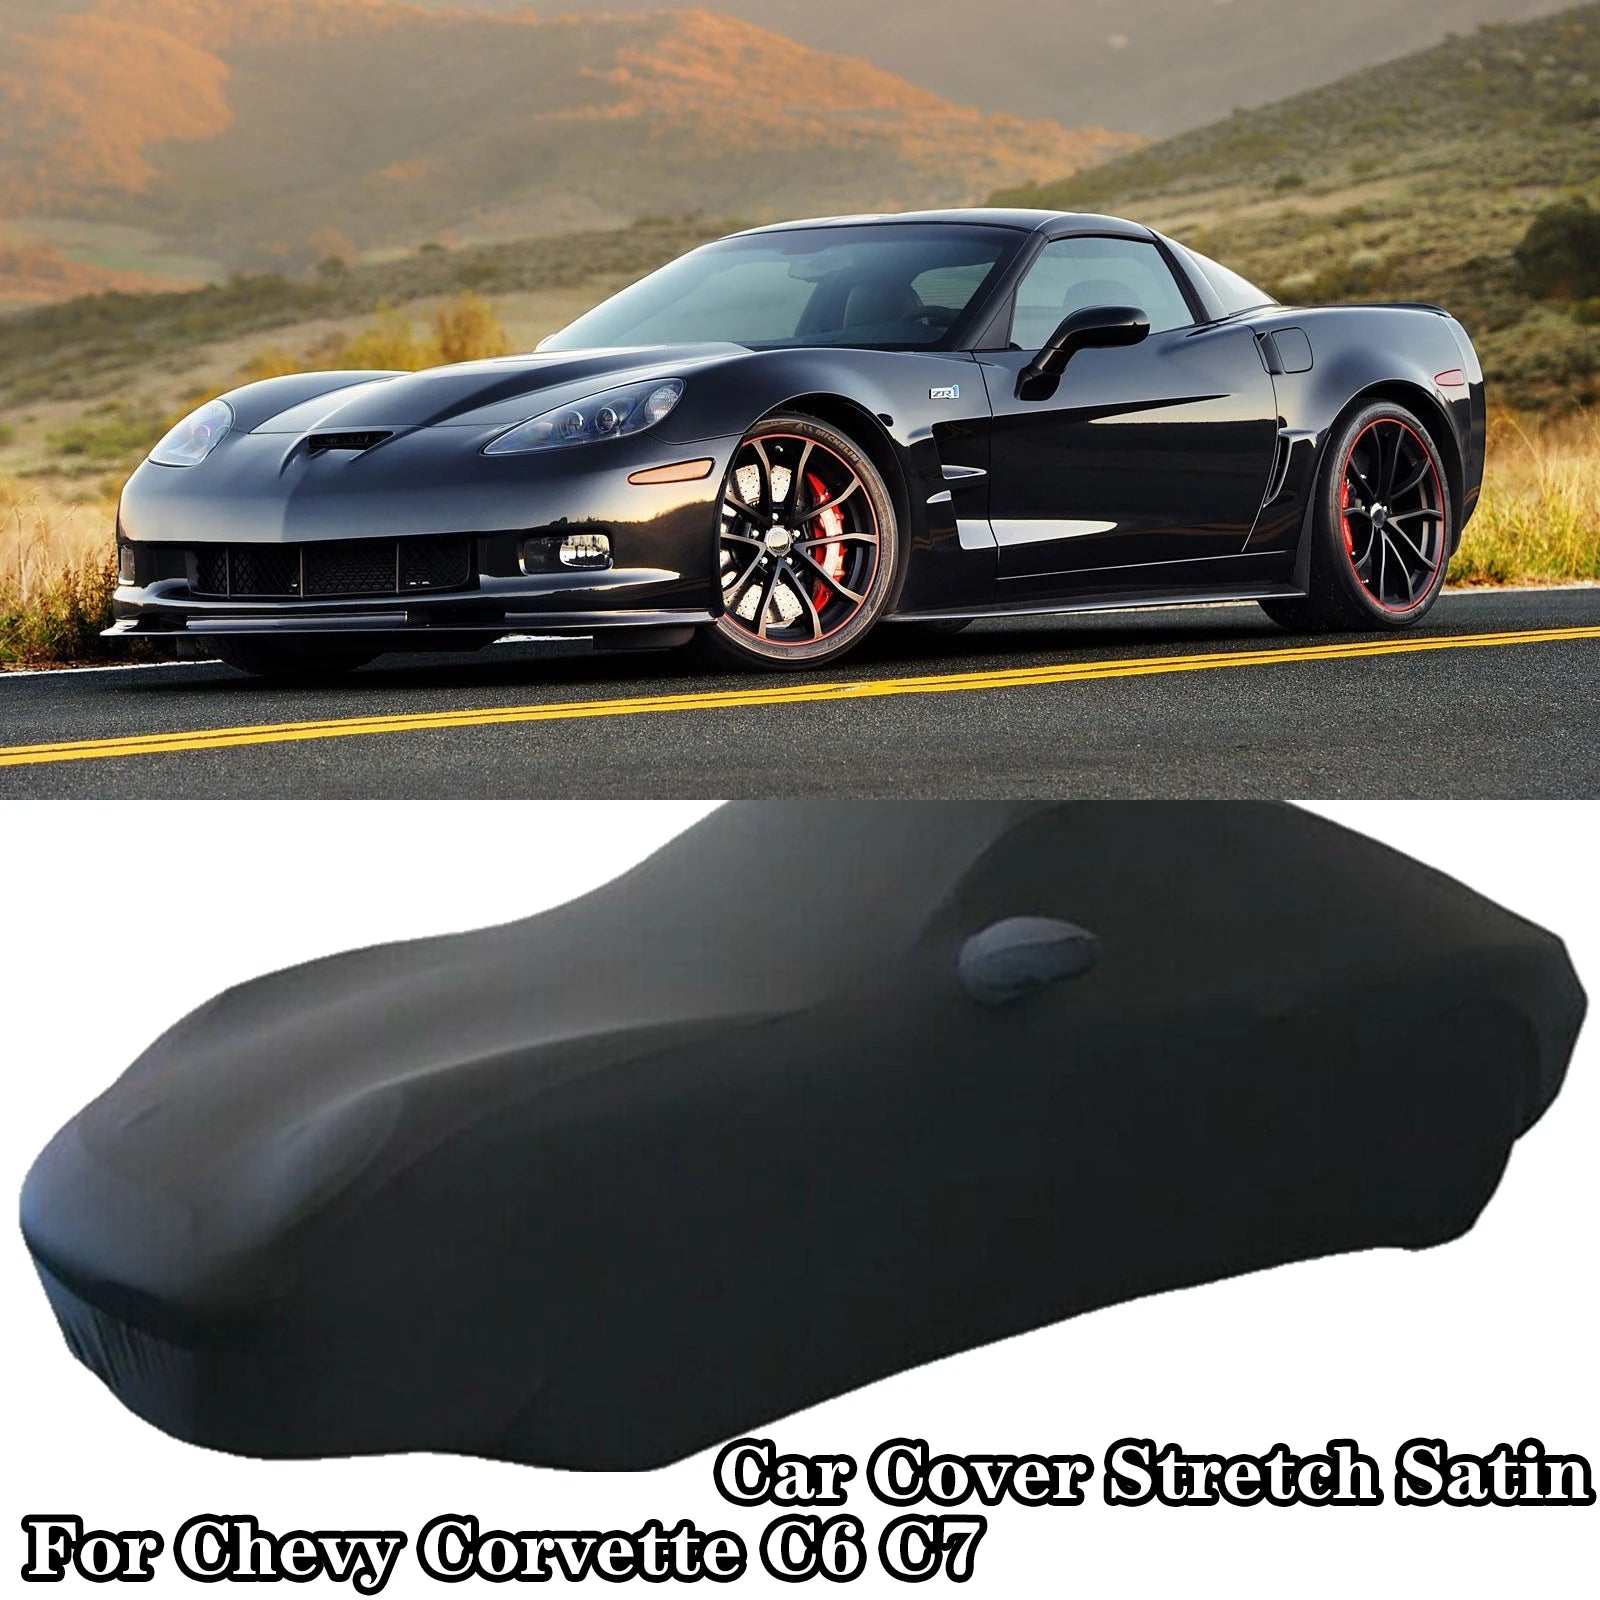 For Chevy Corvette C6 C7 Car Cover Stretch Satin Scratch Dustproof Ultraviolet-proof Indoor